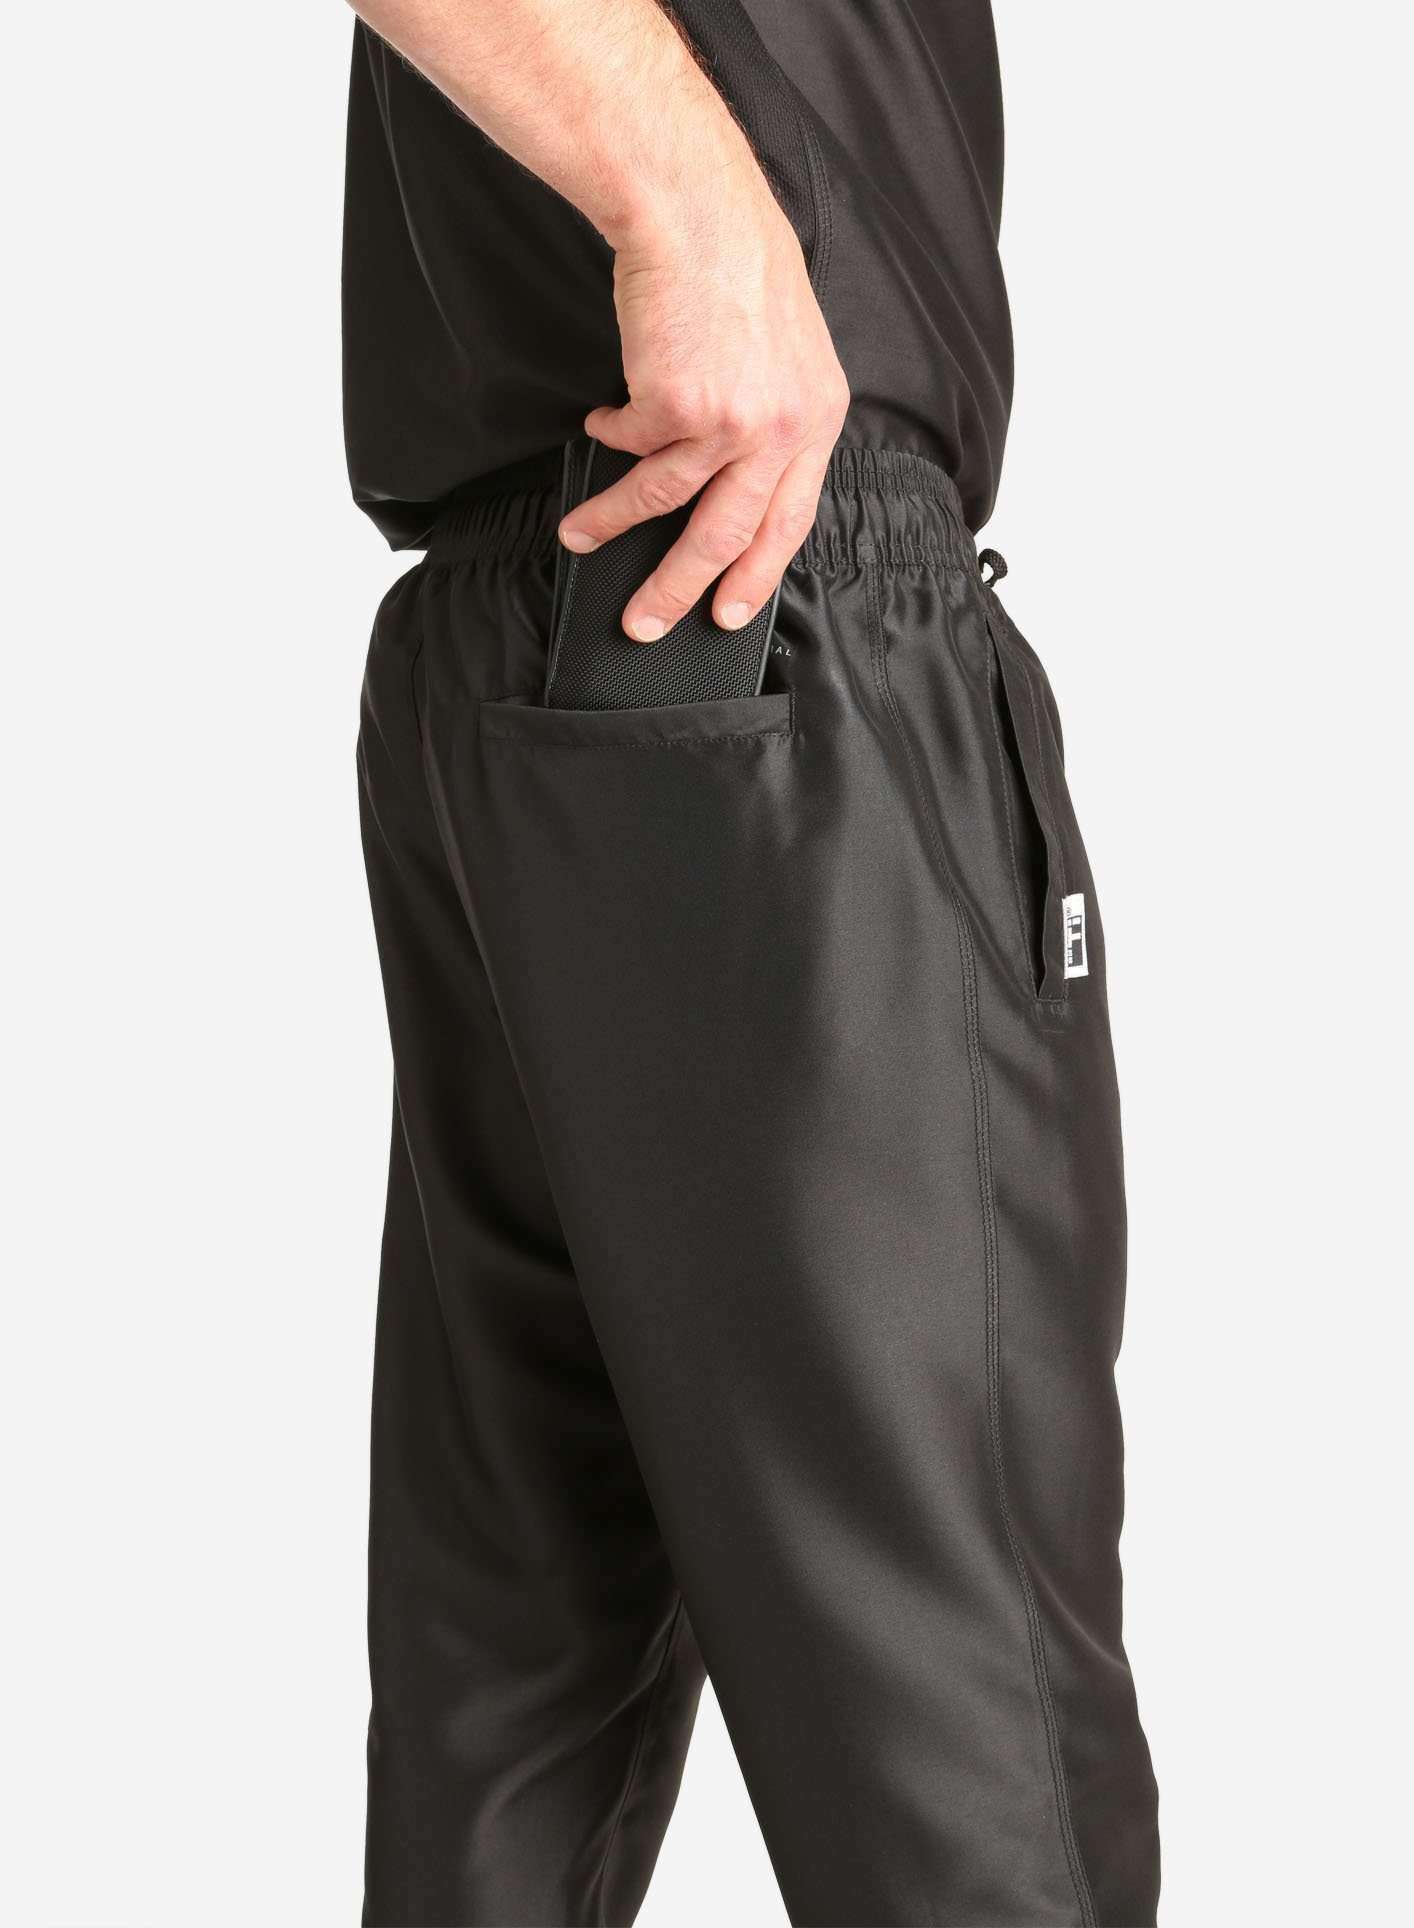 Men's Jogger Scrub Pants in Black Back Pocket Detail View